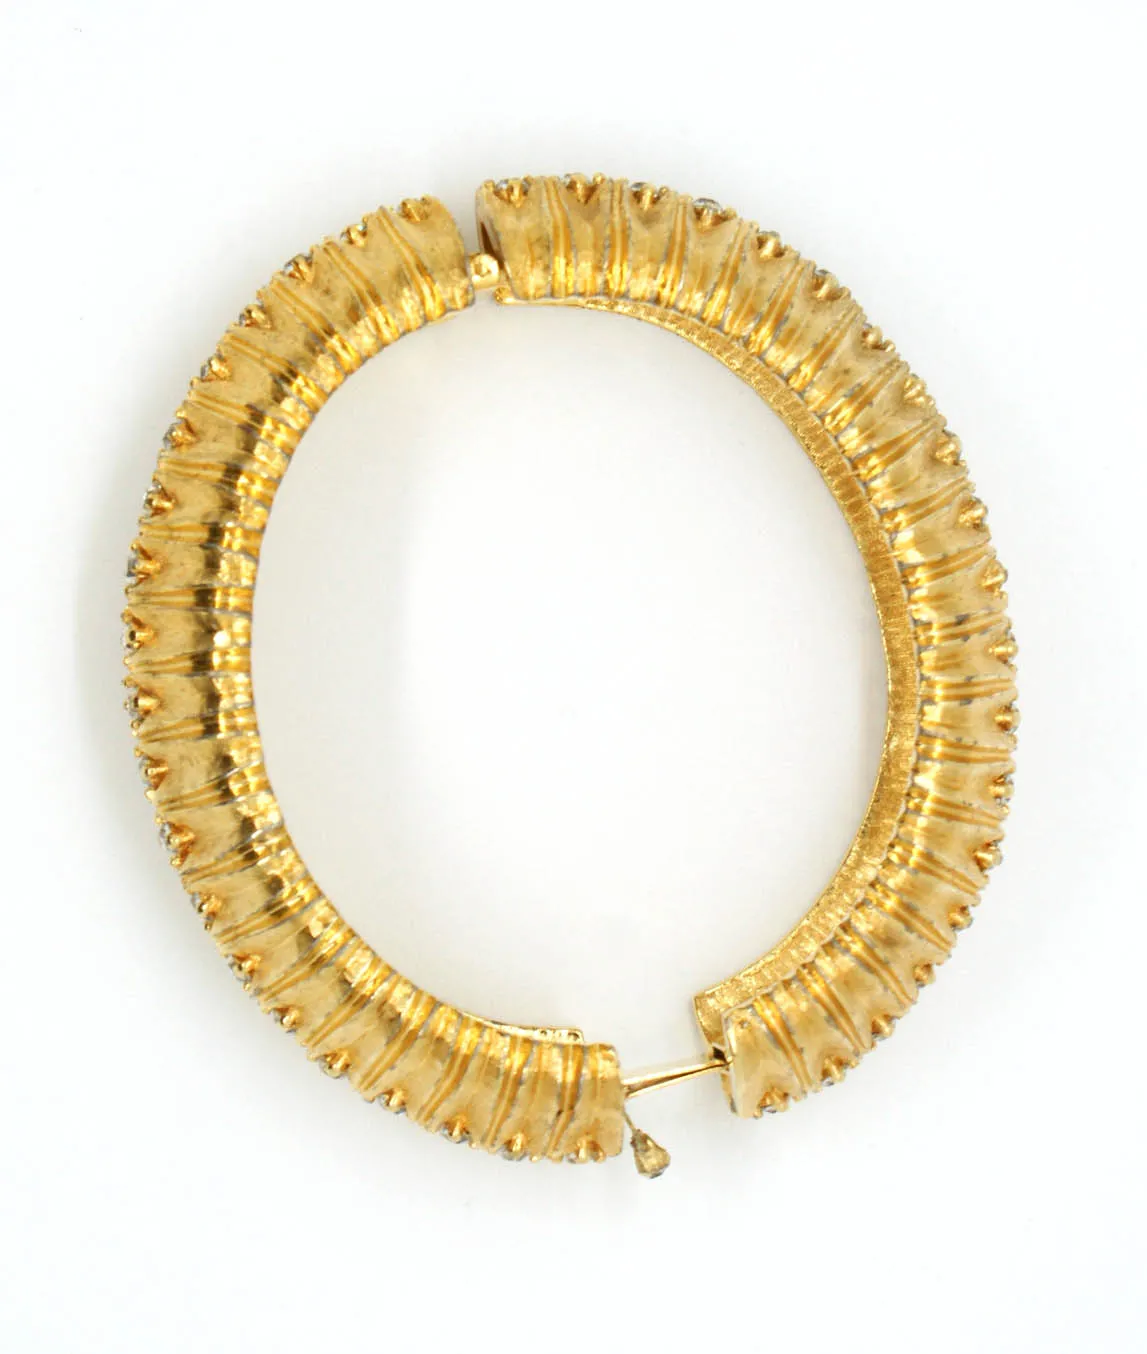 Gold plated bangle by Joseph Mazer